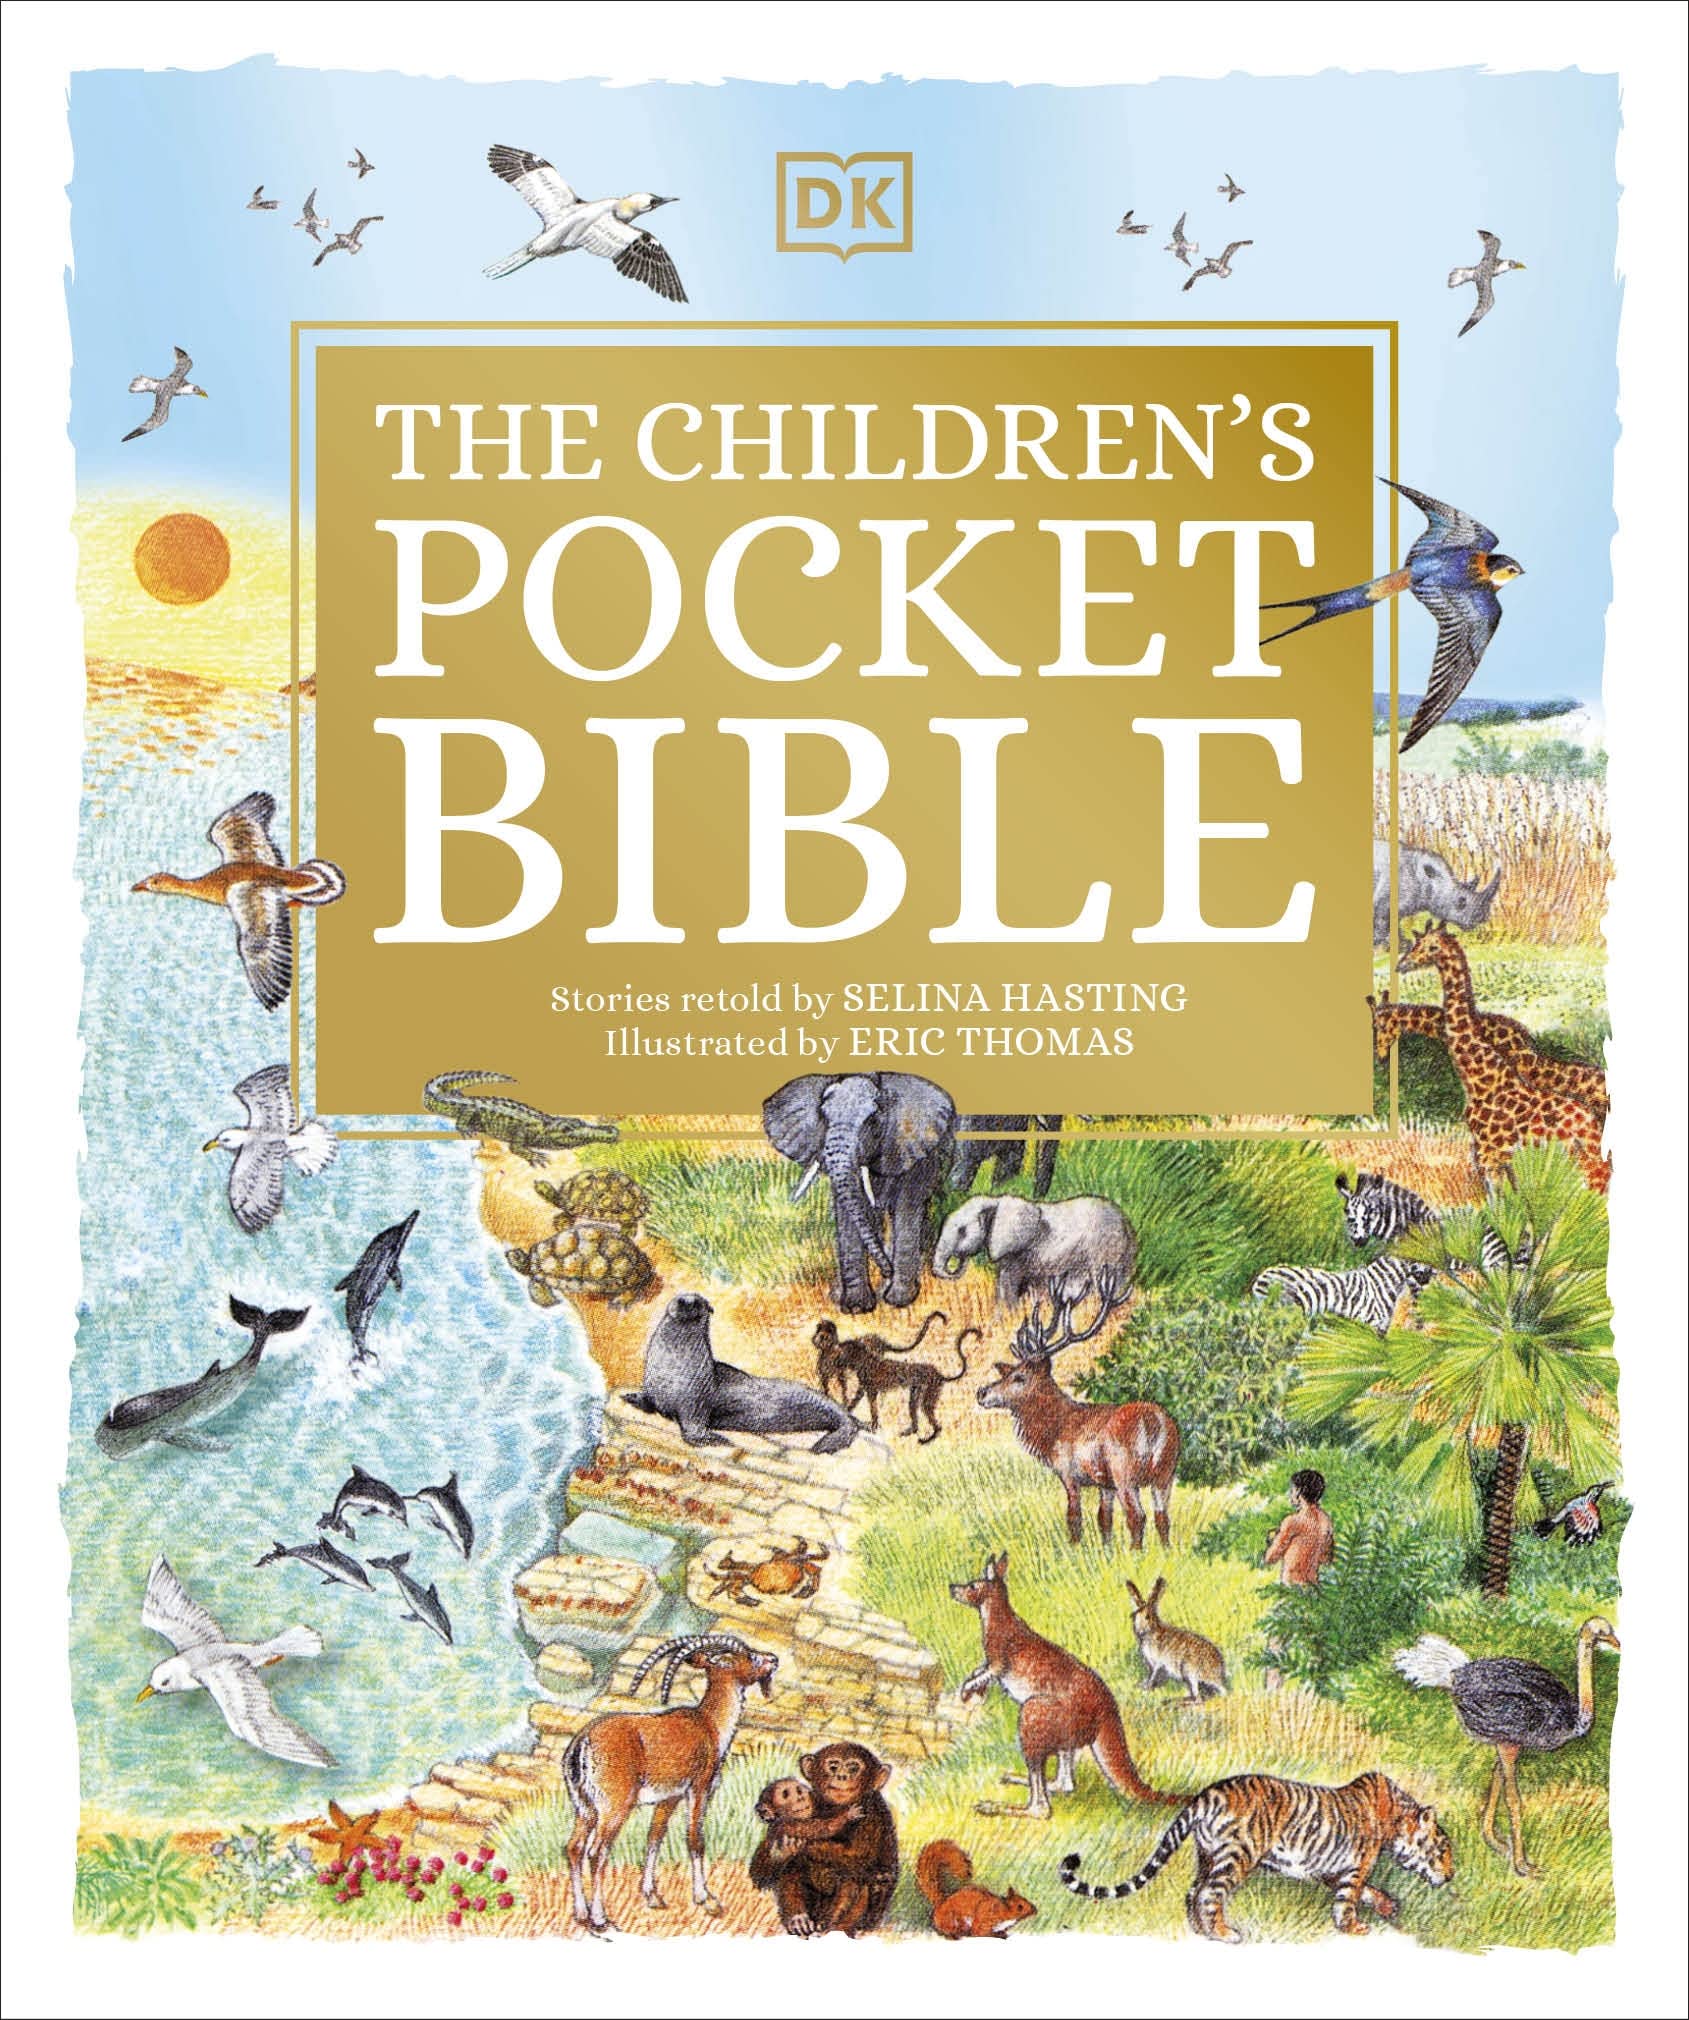 The Children’s Pocket Bible